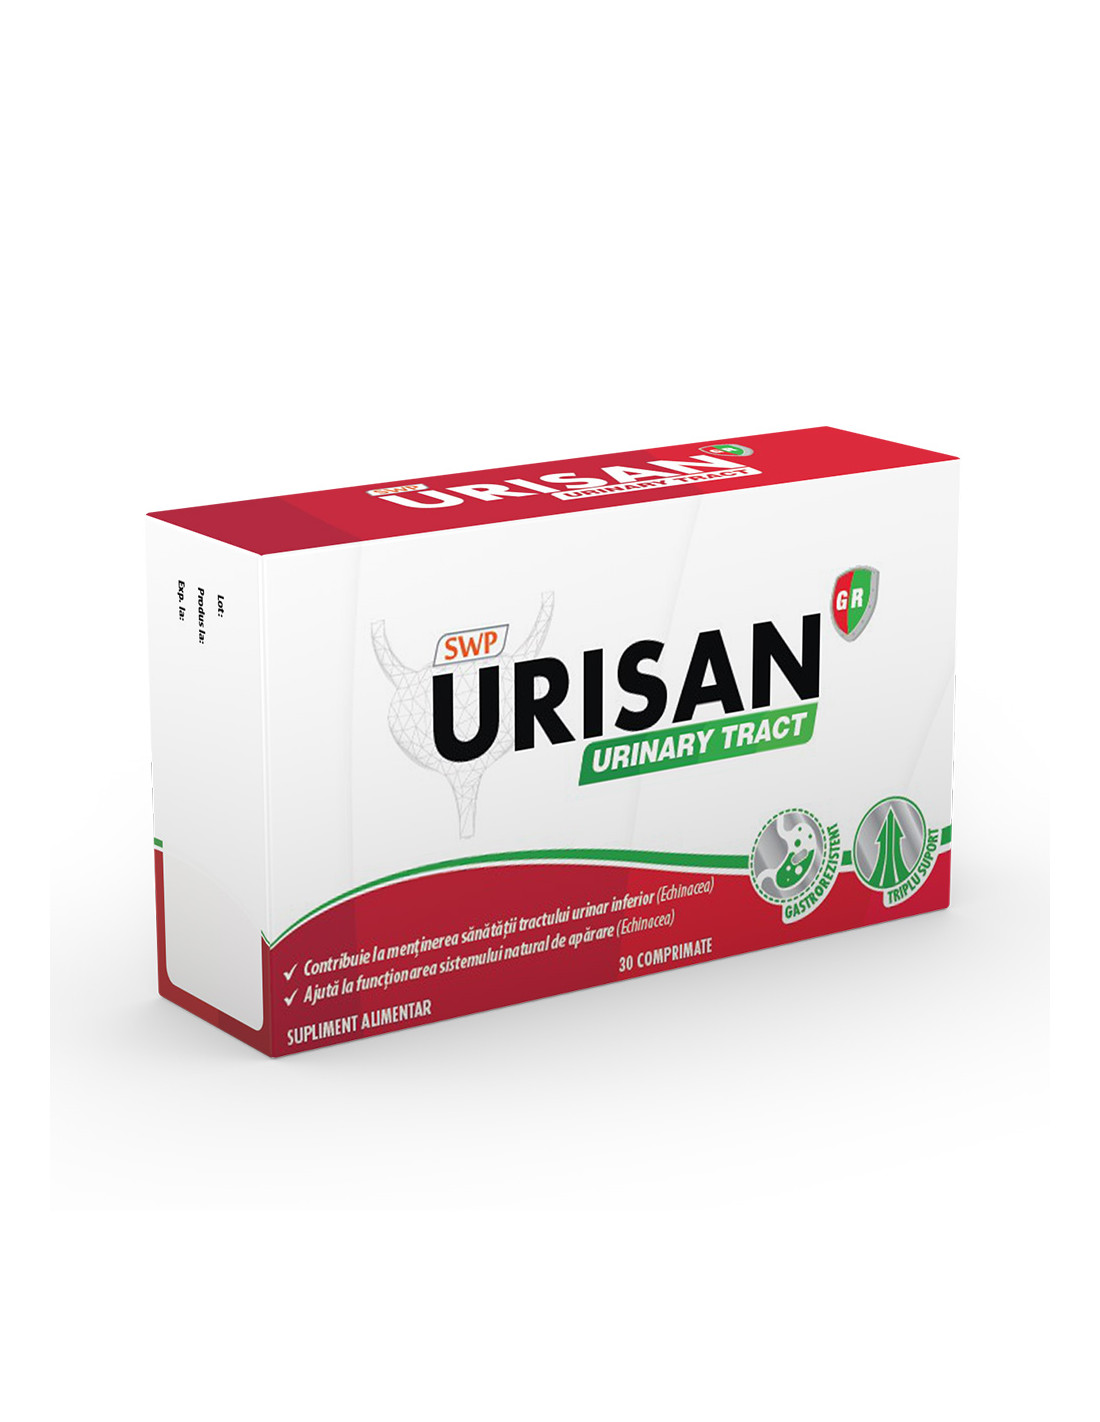 Dezinfectante urinare - Urisan Urinary Tract, 30 comprimate, Sun Wave Pharma, sinapis.ro